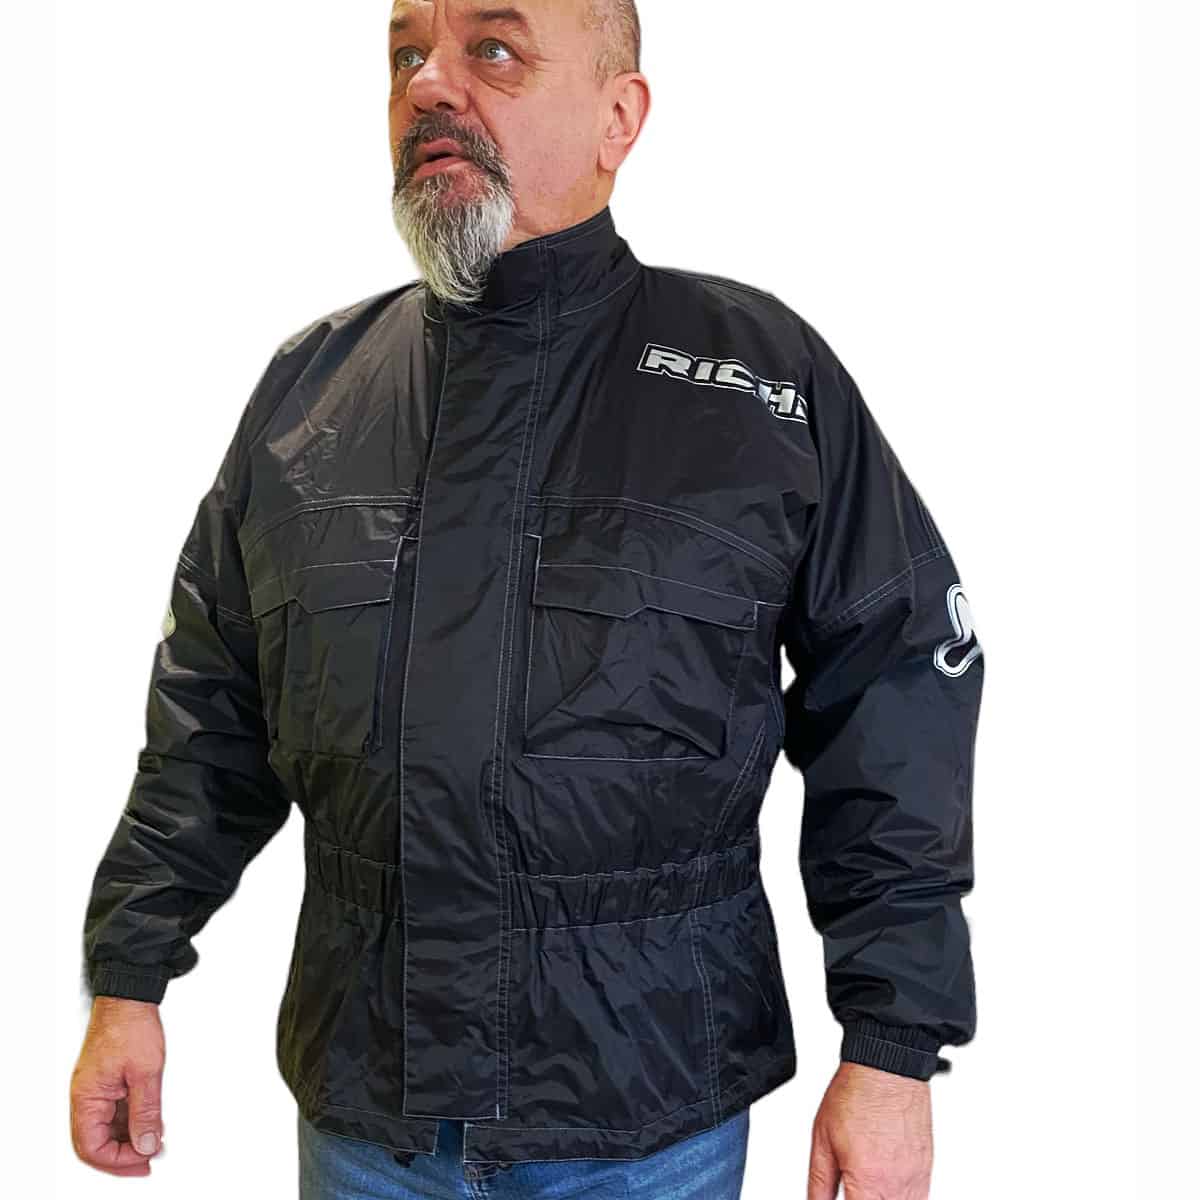 Richa Rain Warrior Waterproof Overjacket: 'Best buy' rain jacket that does not break the bank